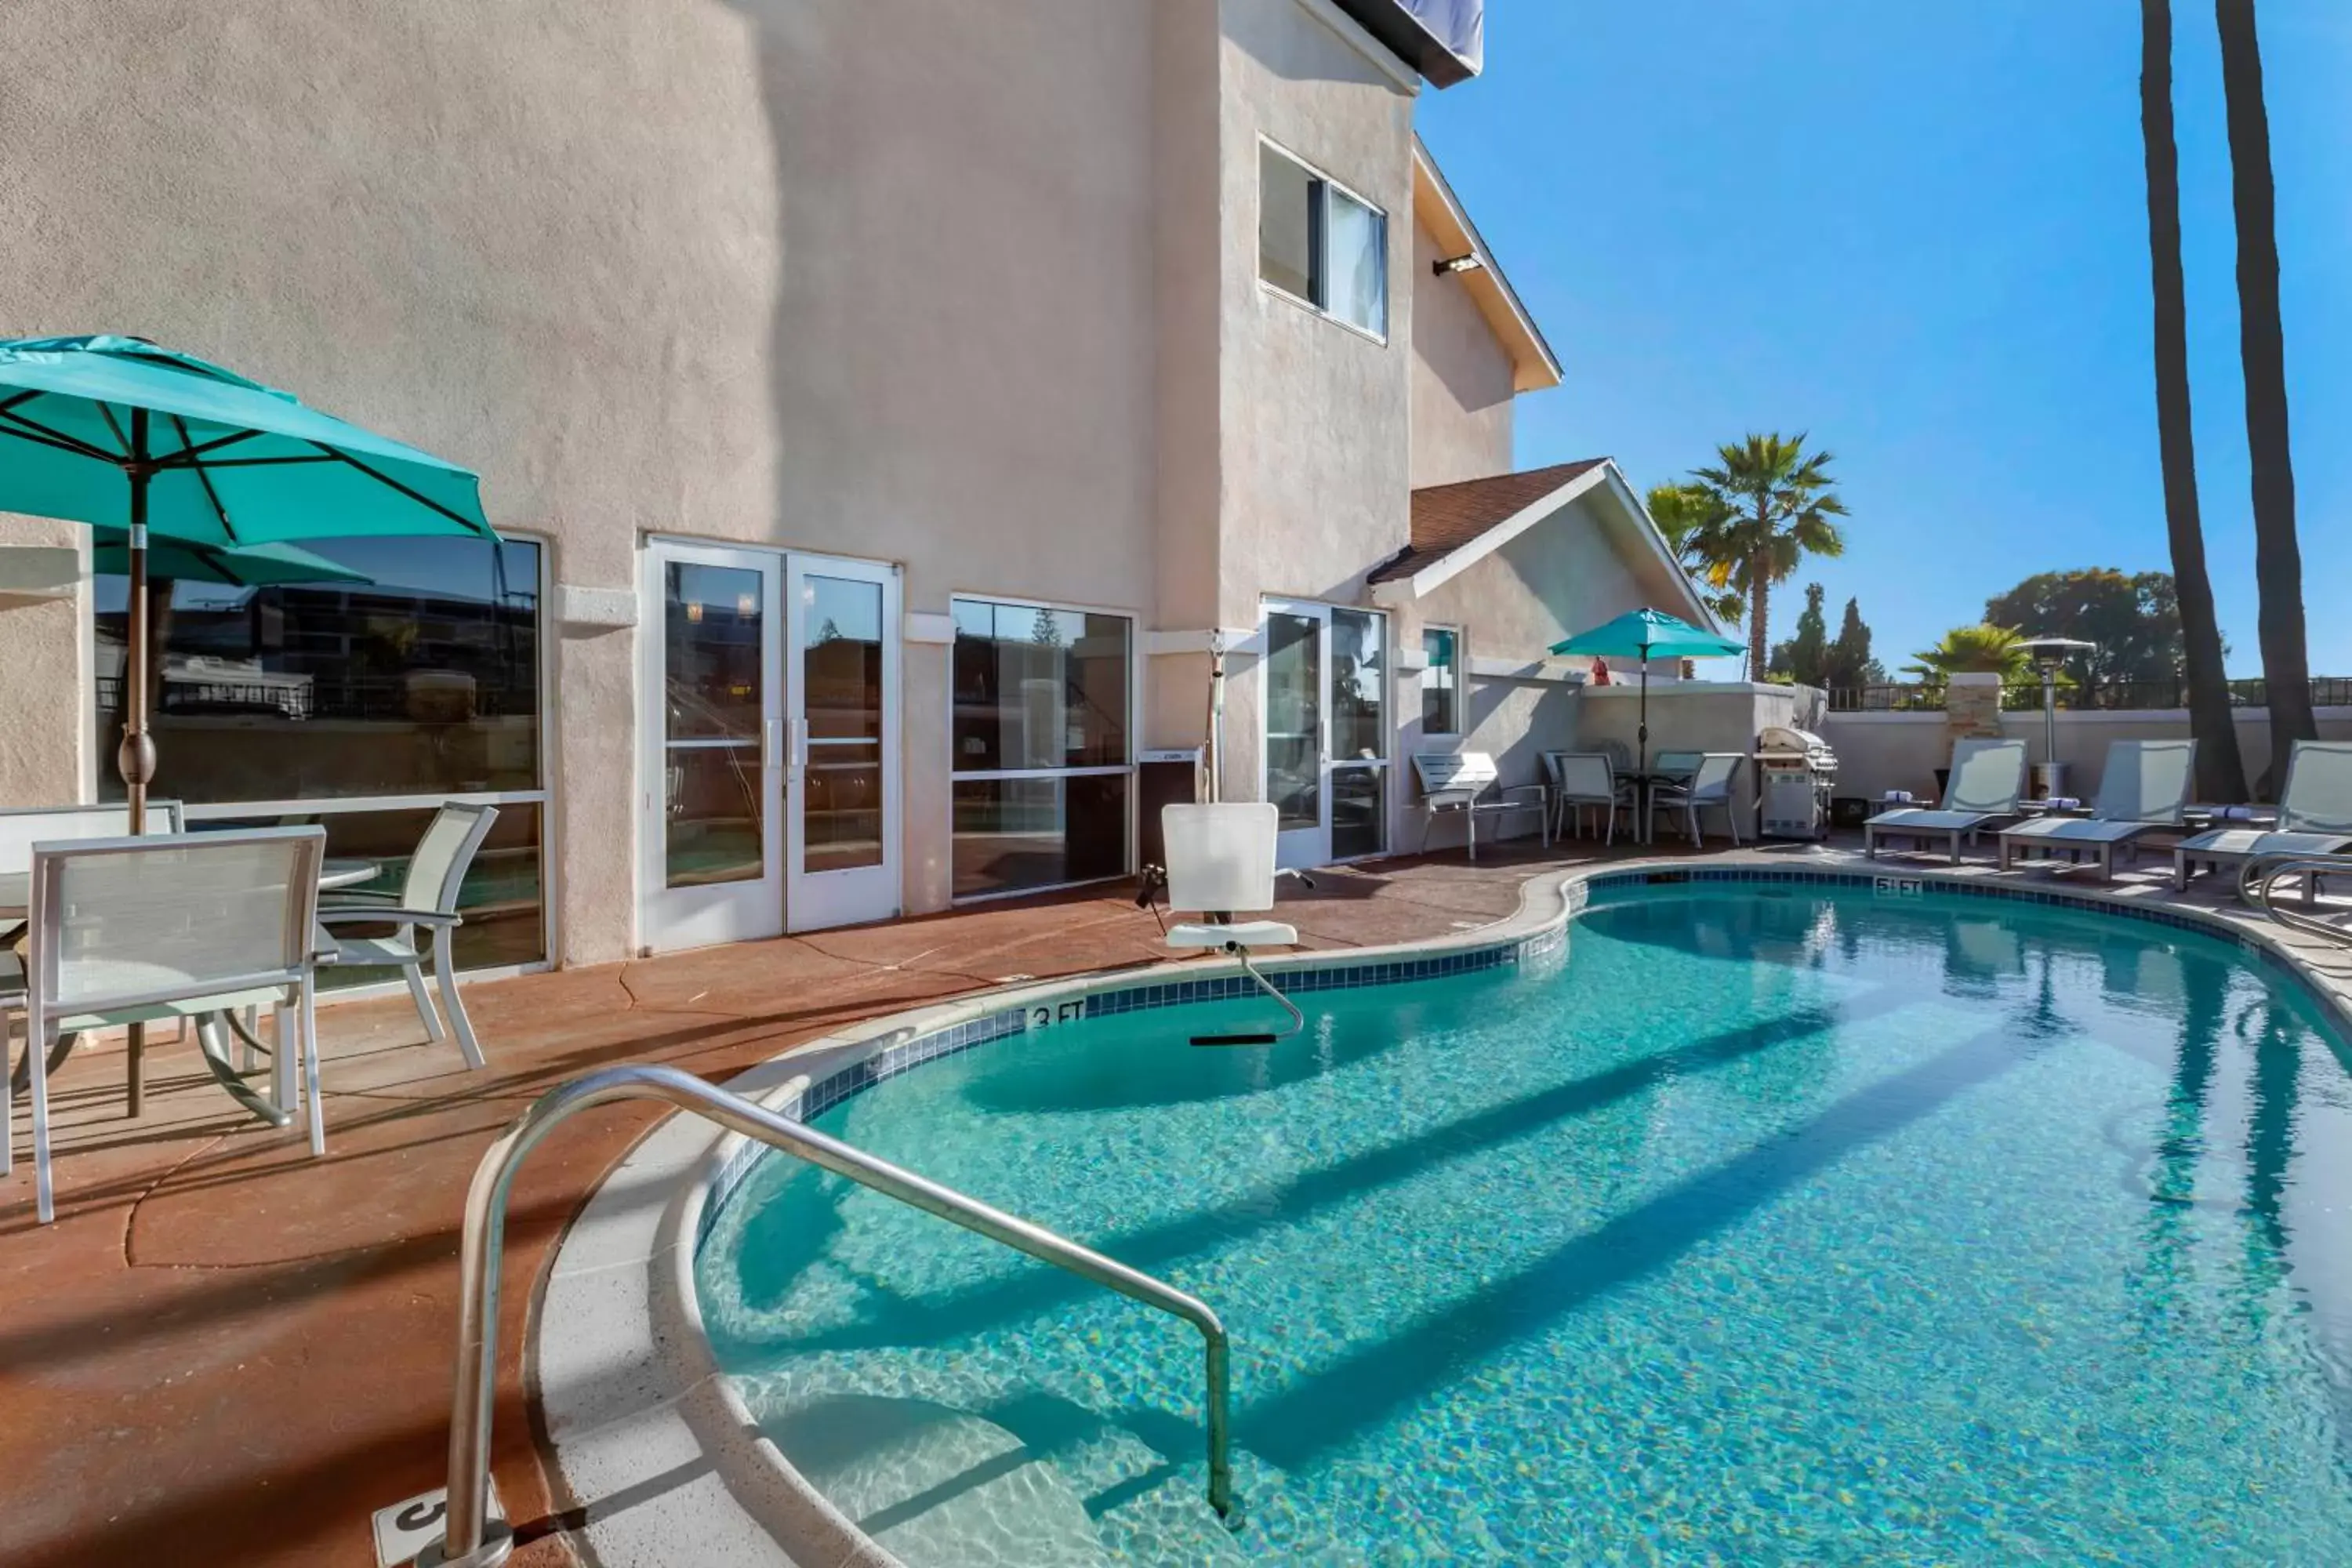 Swimming pool in Comfort Inn San Diego Miramar